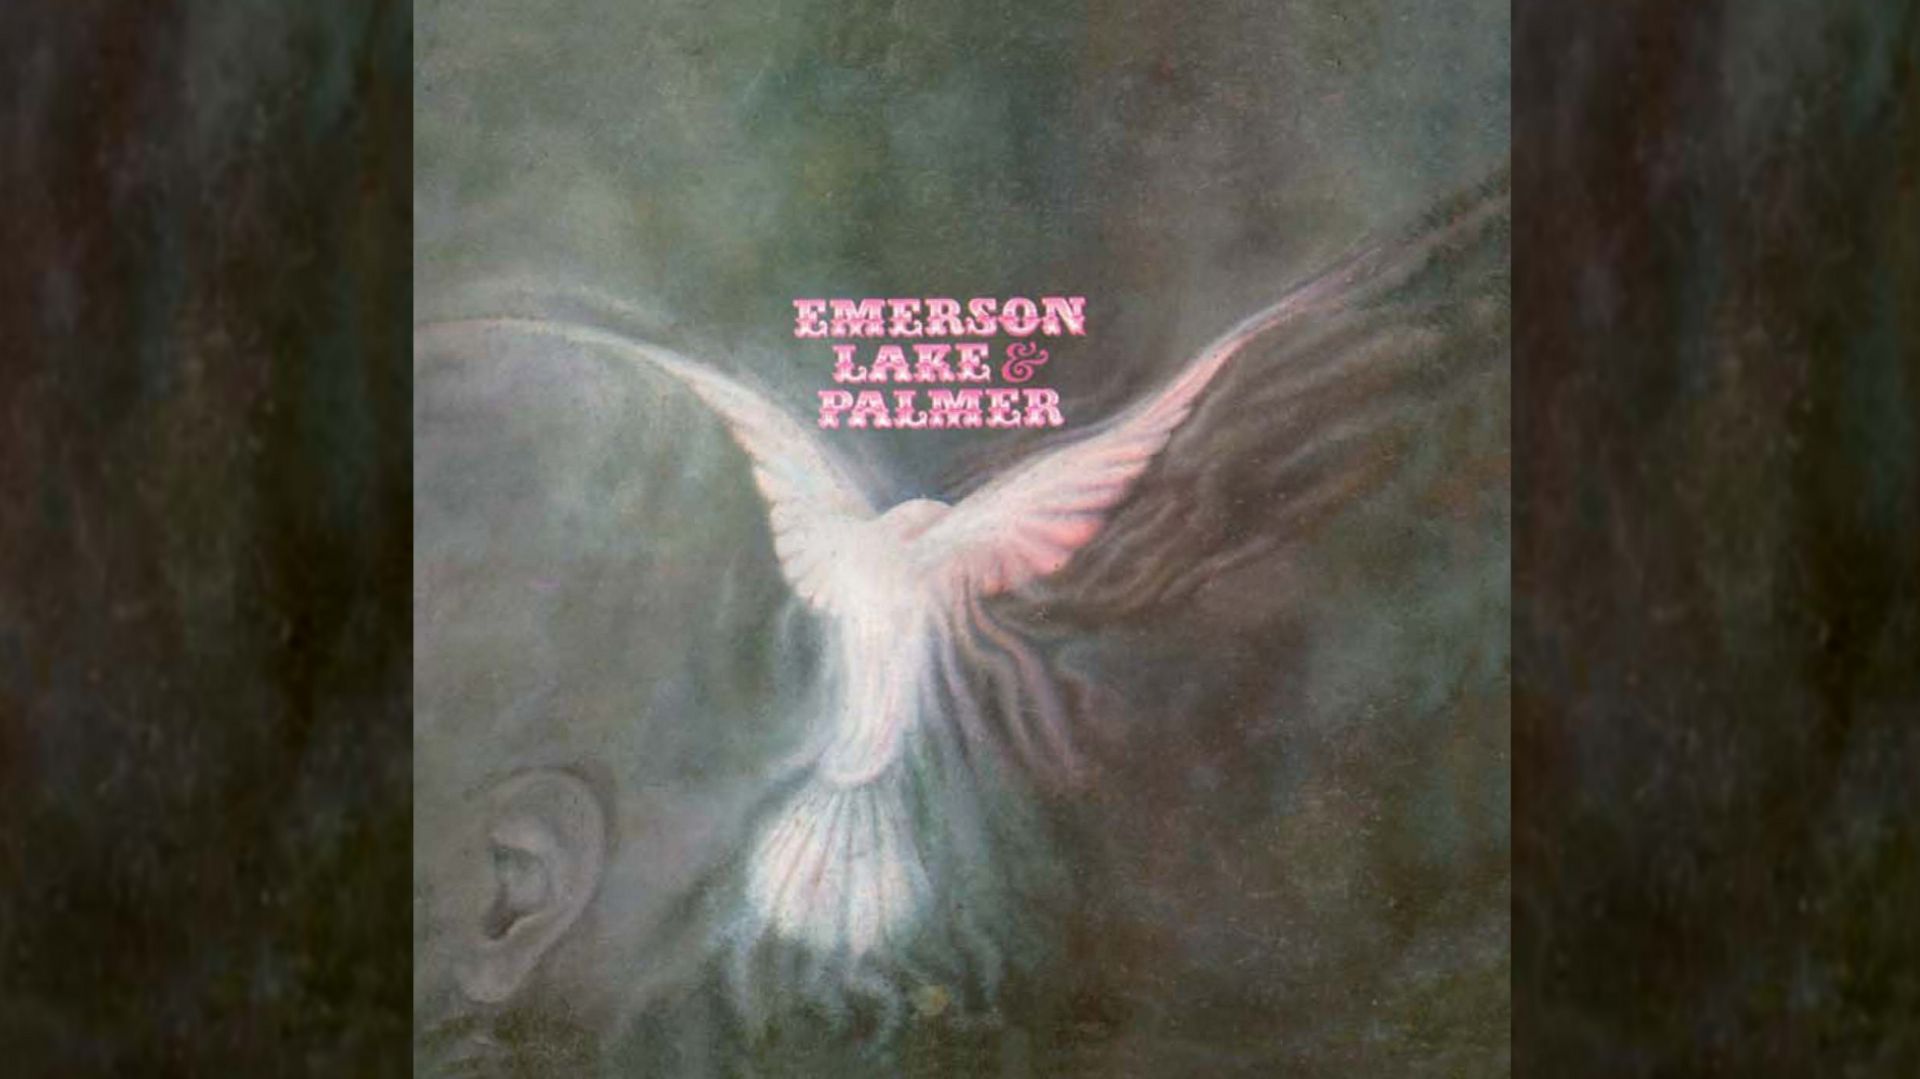 le-making-of-19h-emerson-lake-and-palmer-emerson-lake-and-palmer-1970